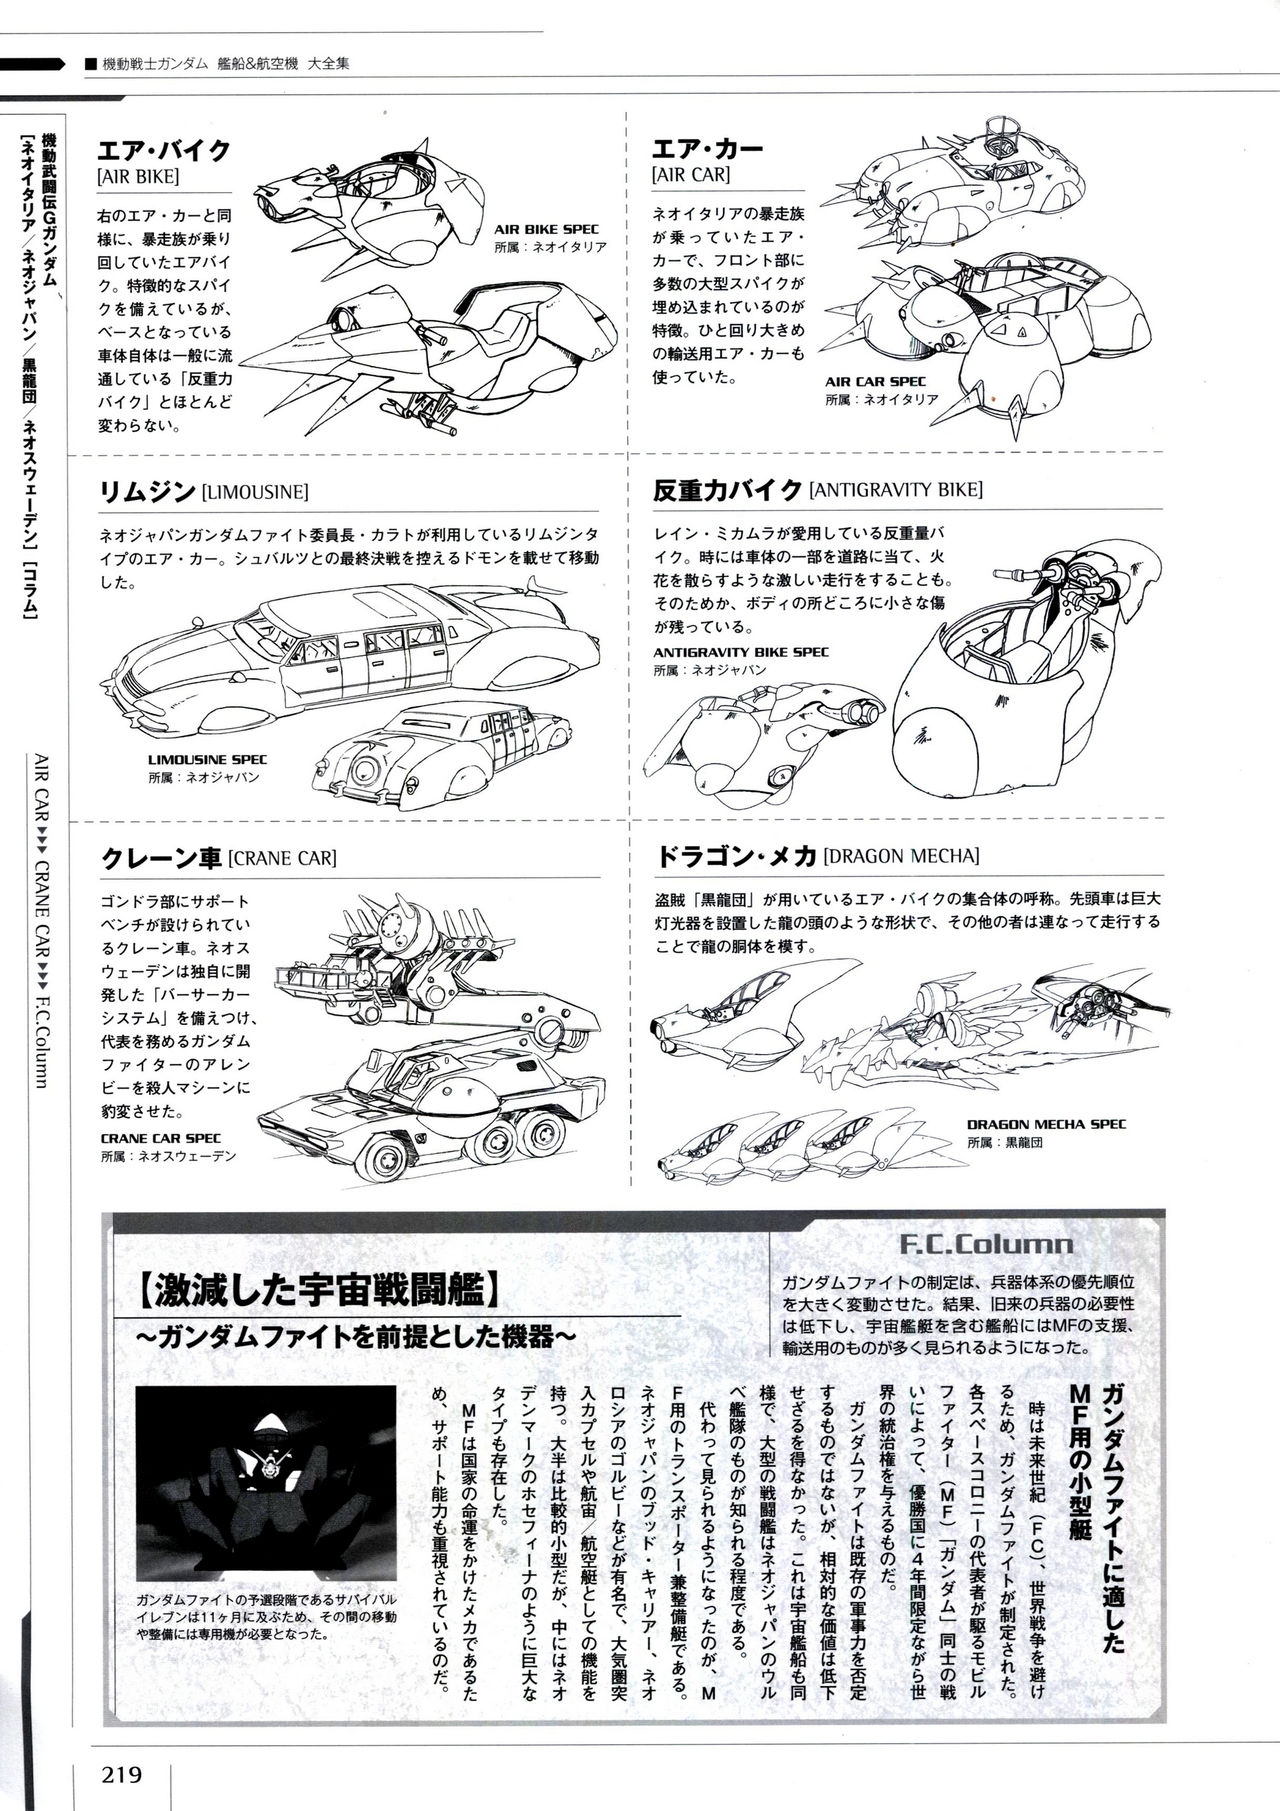 Mobile Suit Gundam - Ship & Aerospace Plane Encyclopedia - Revised Edition 224